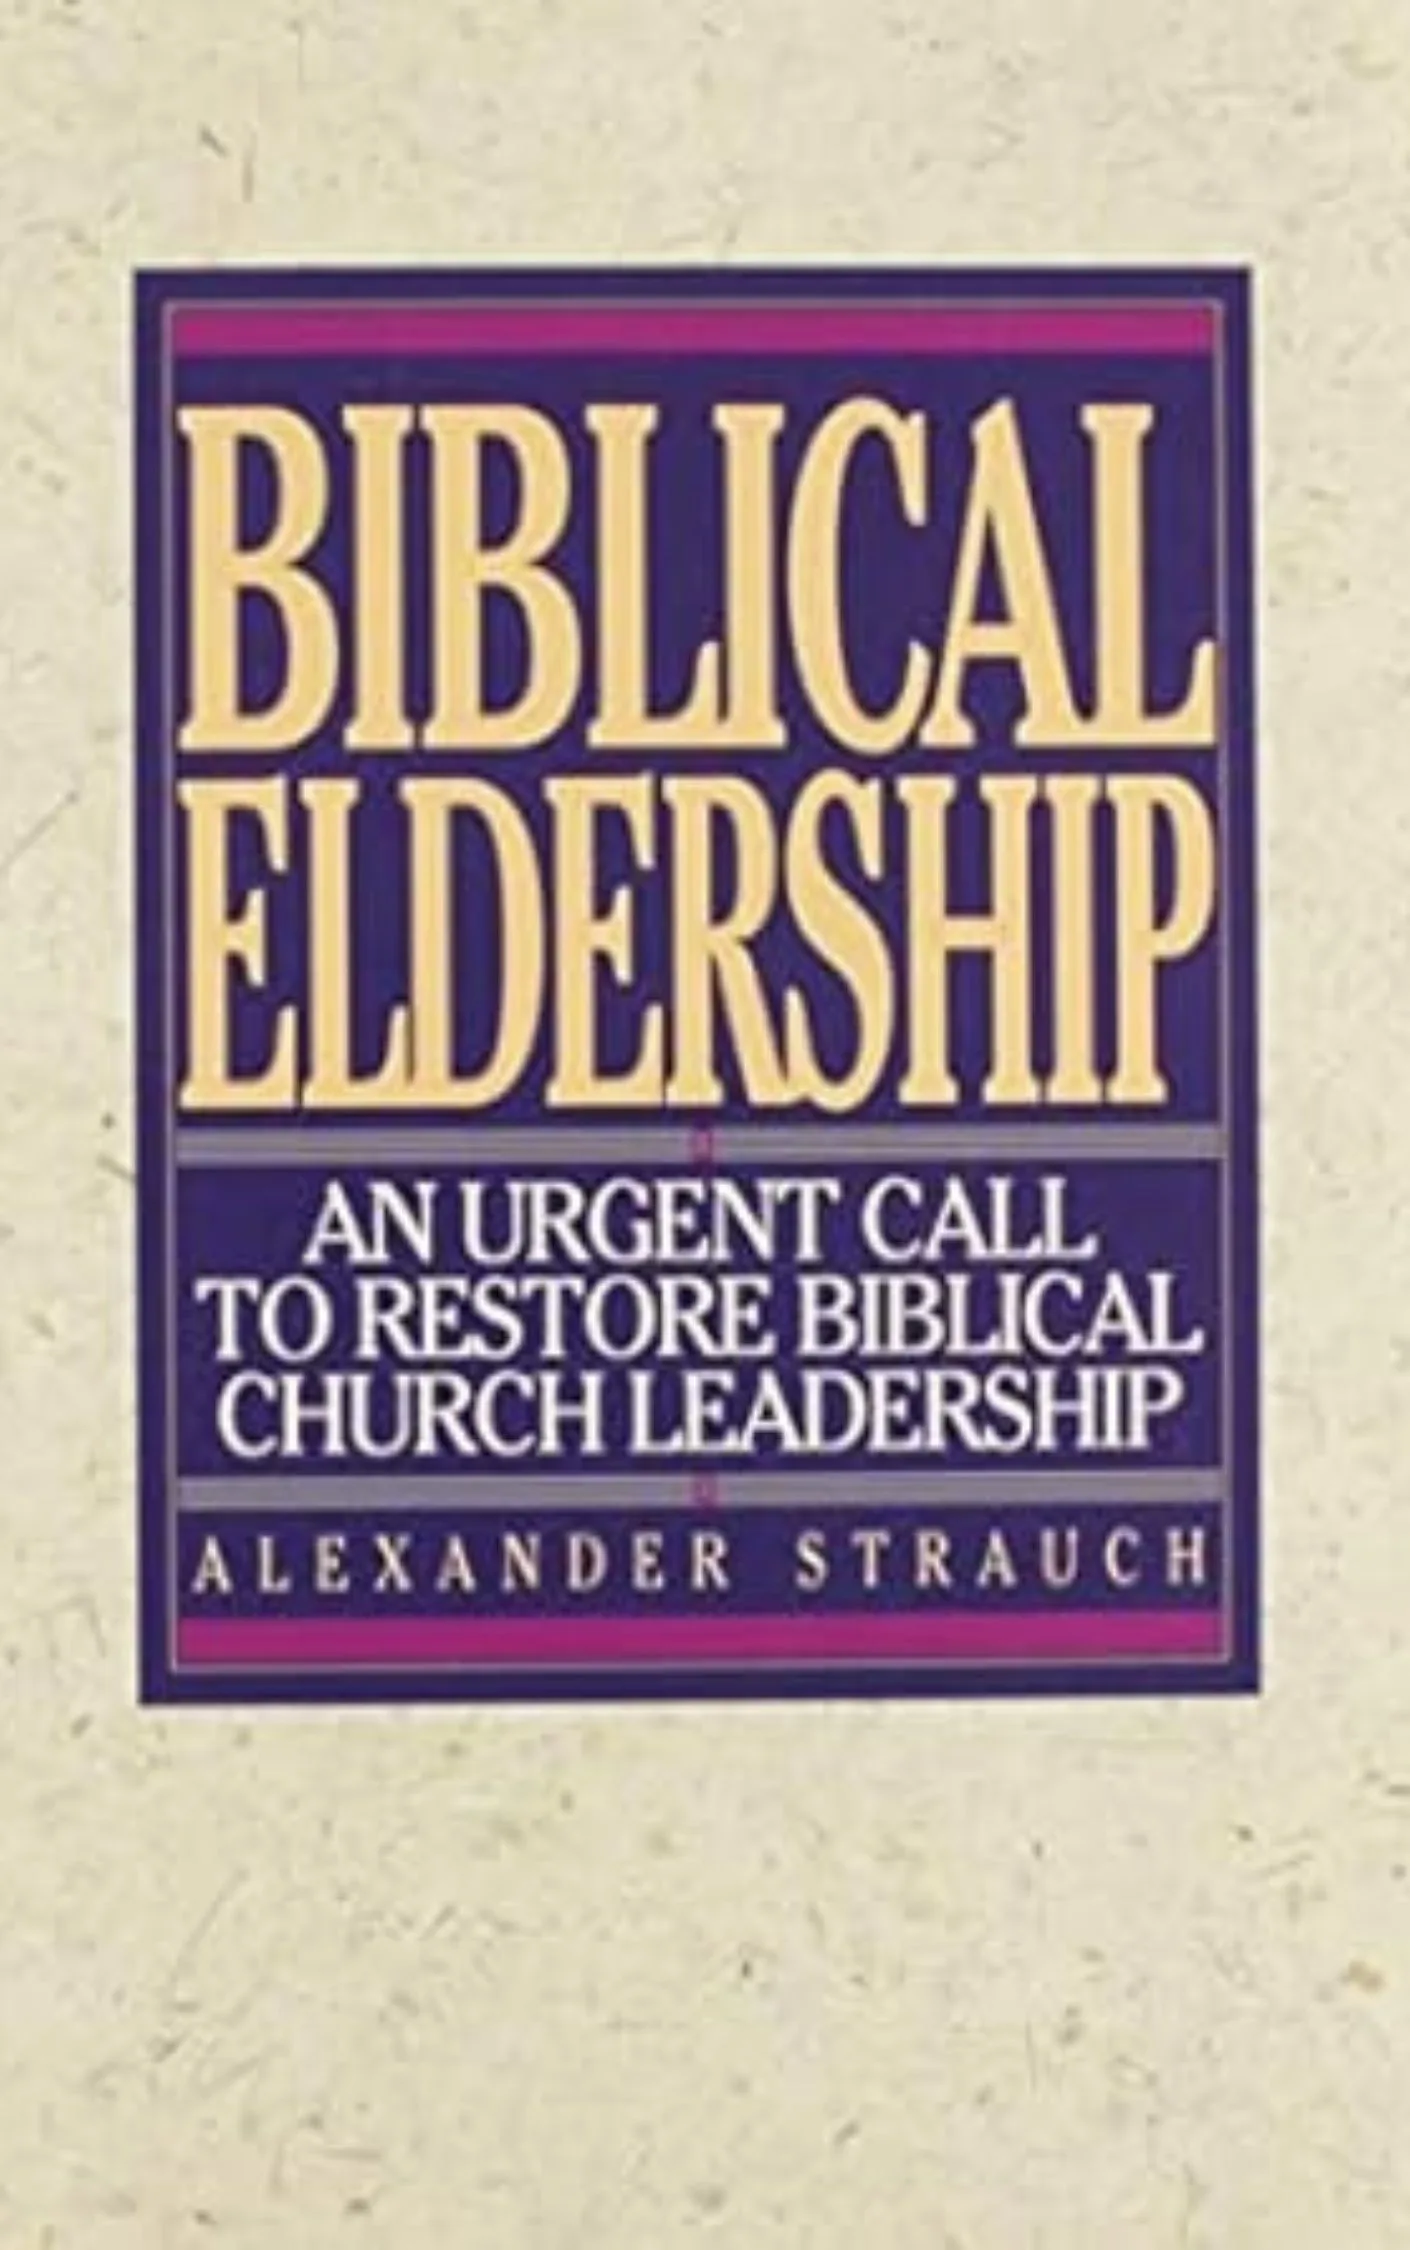 Biblical Eldership by Alexander Strauch